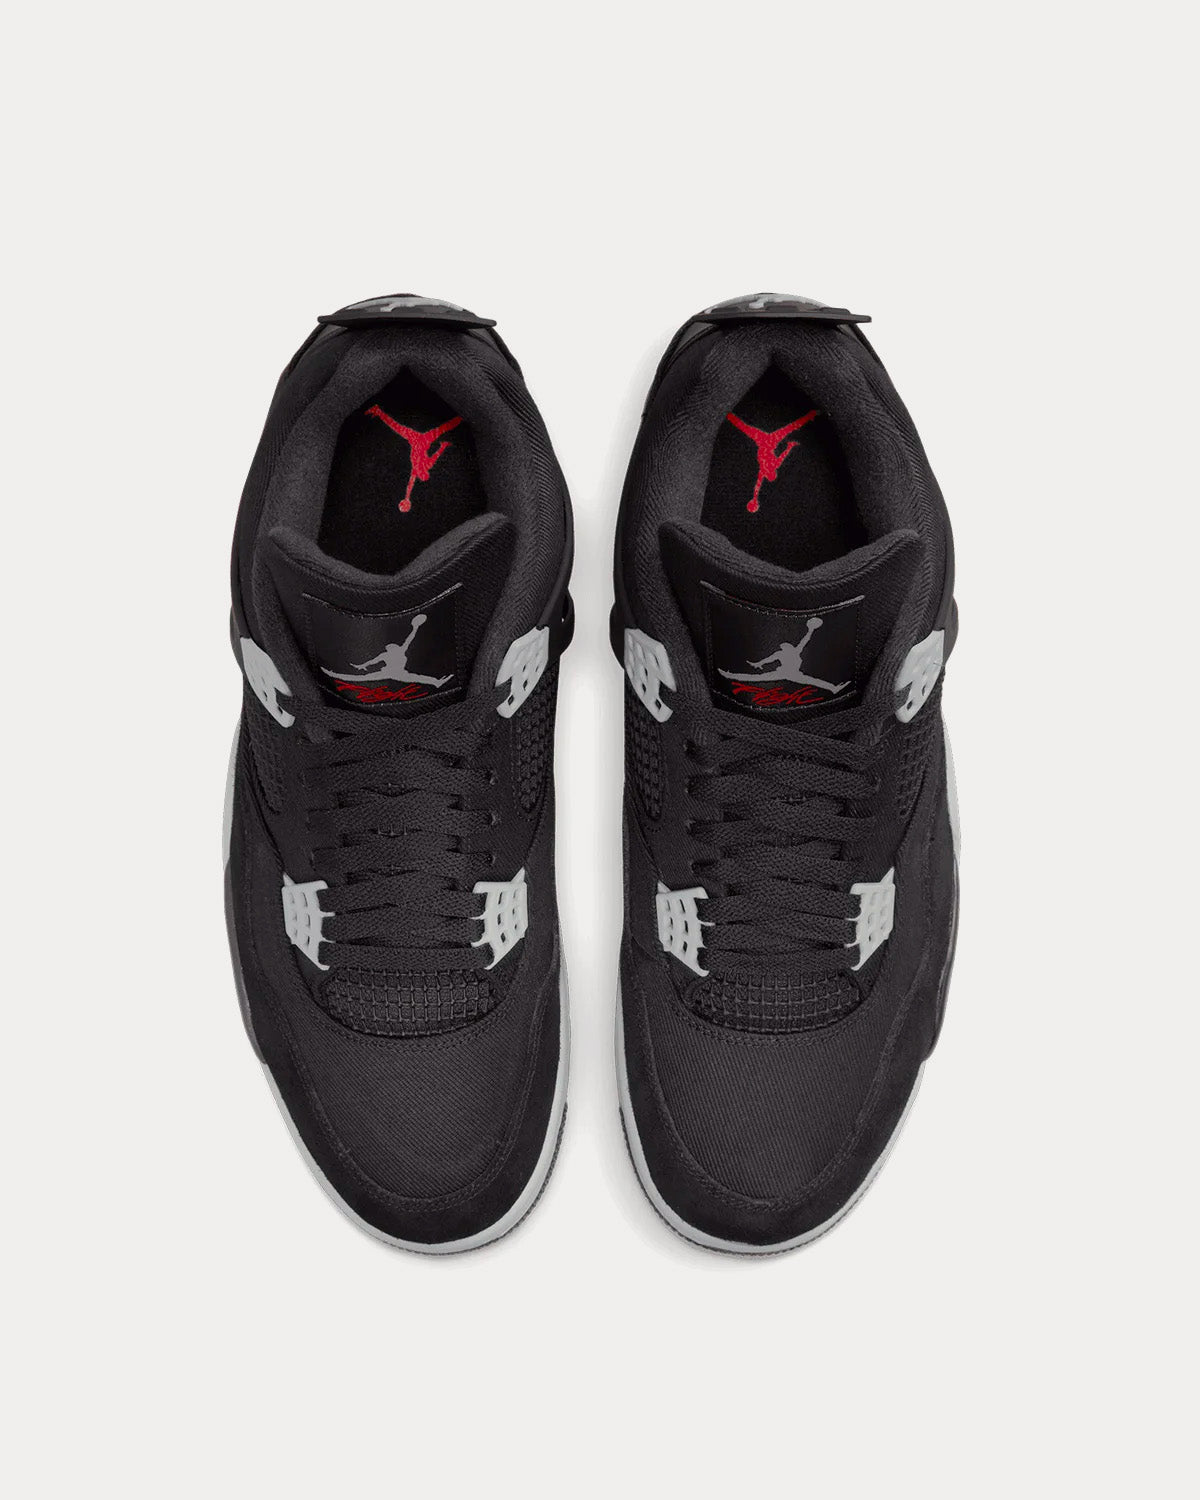 Jordan Air Jordan 4 Retro SE Black / Steel / White / Red High Top Sneakers  - Sneak in Peace